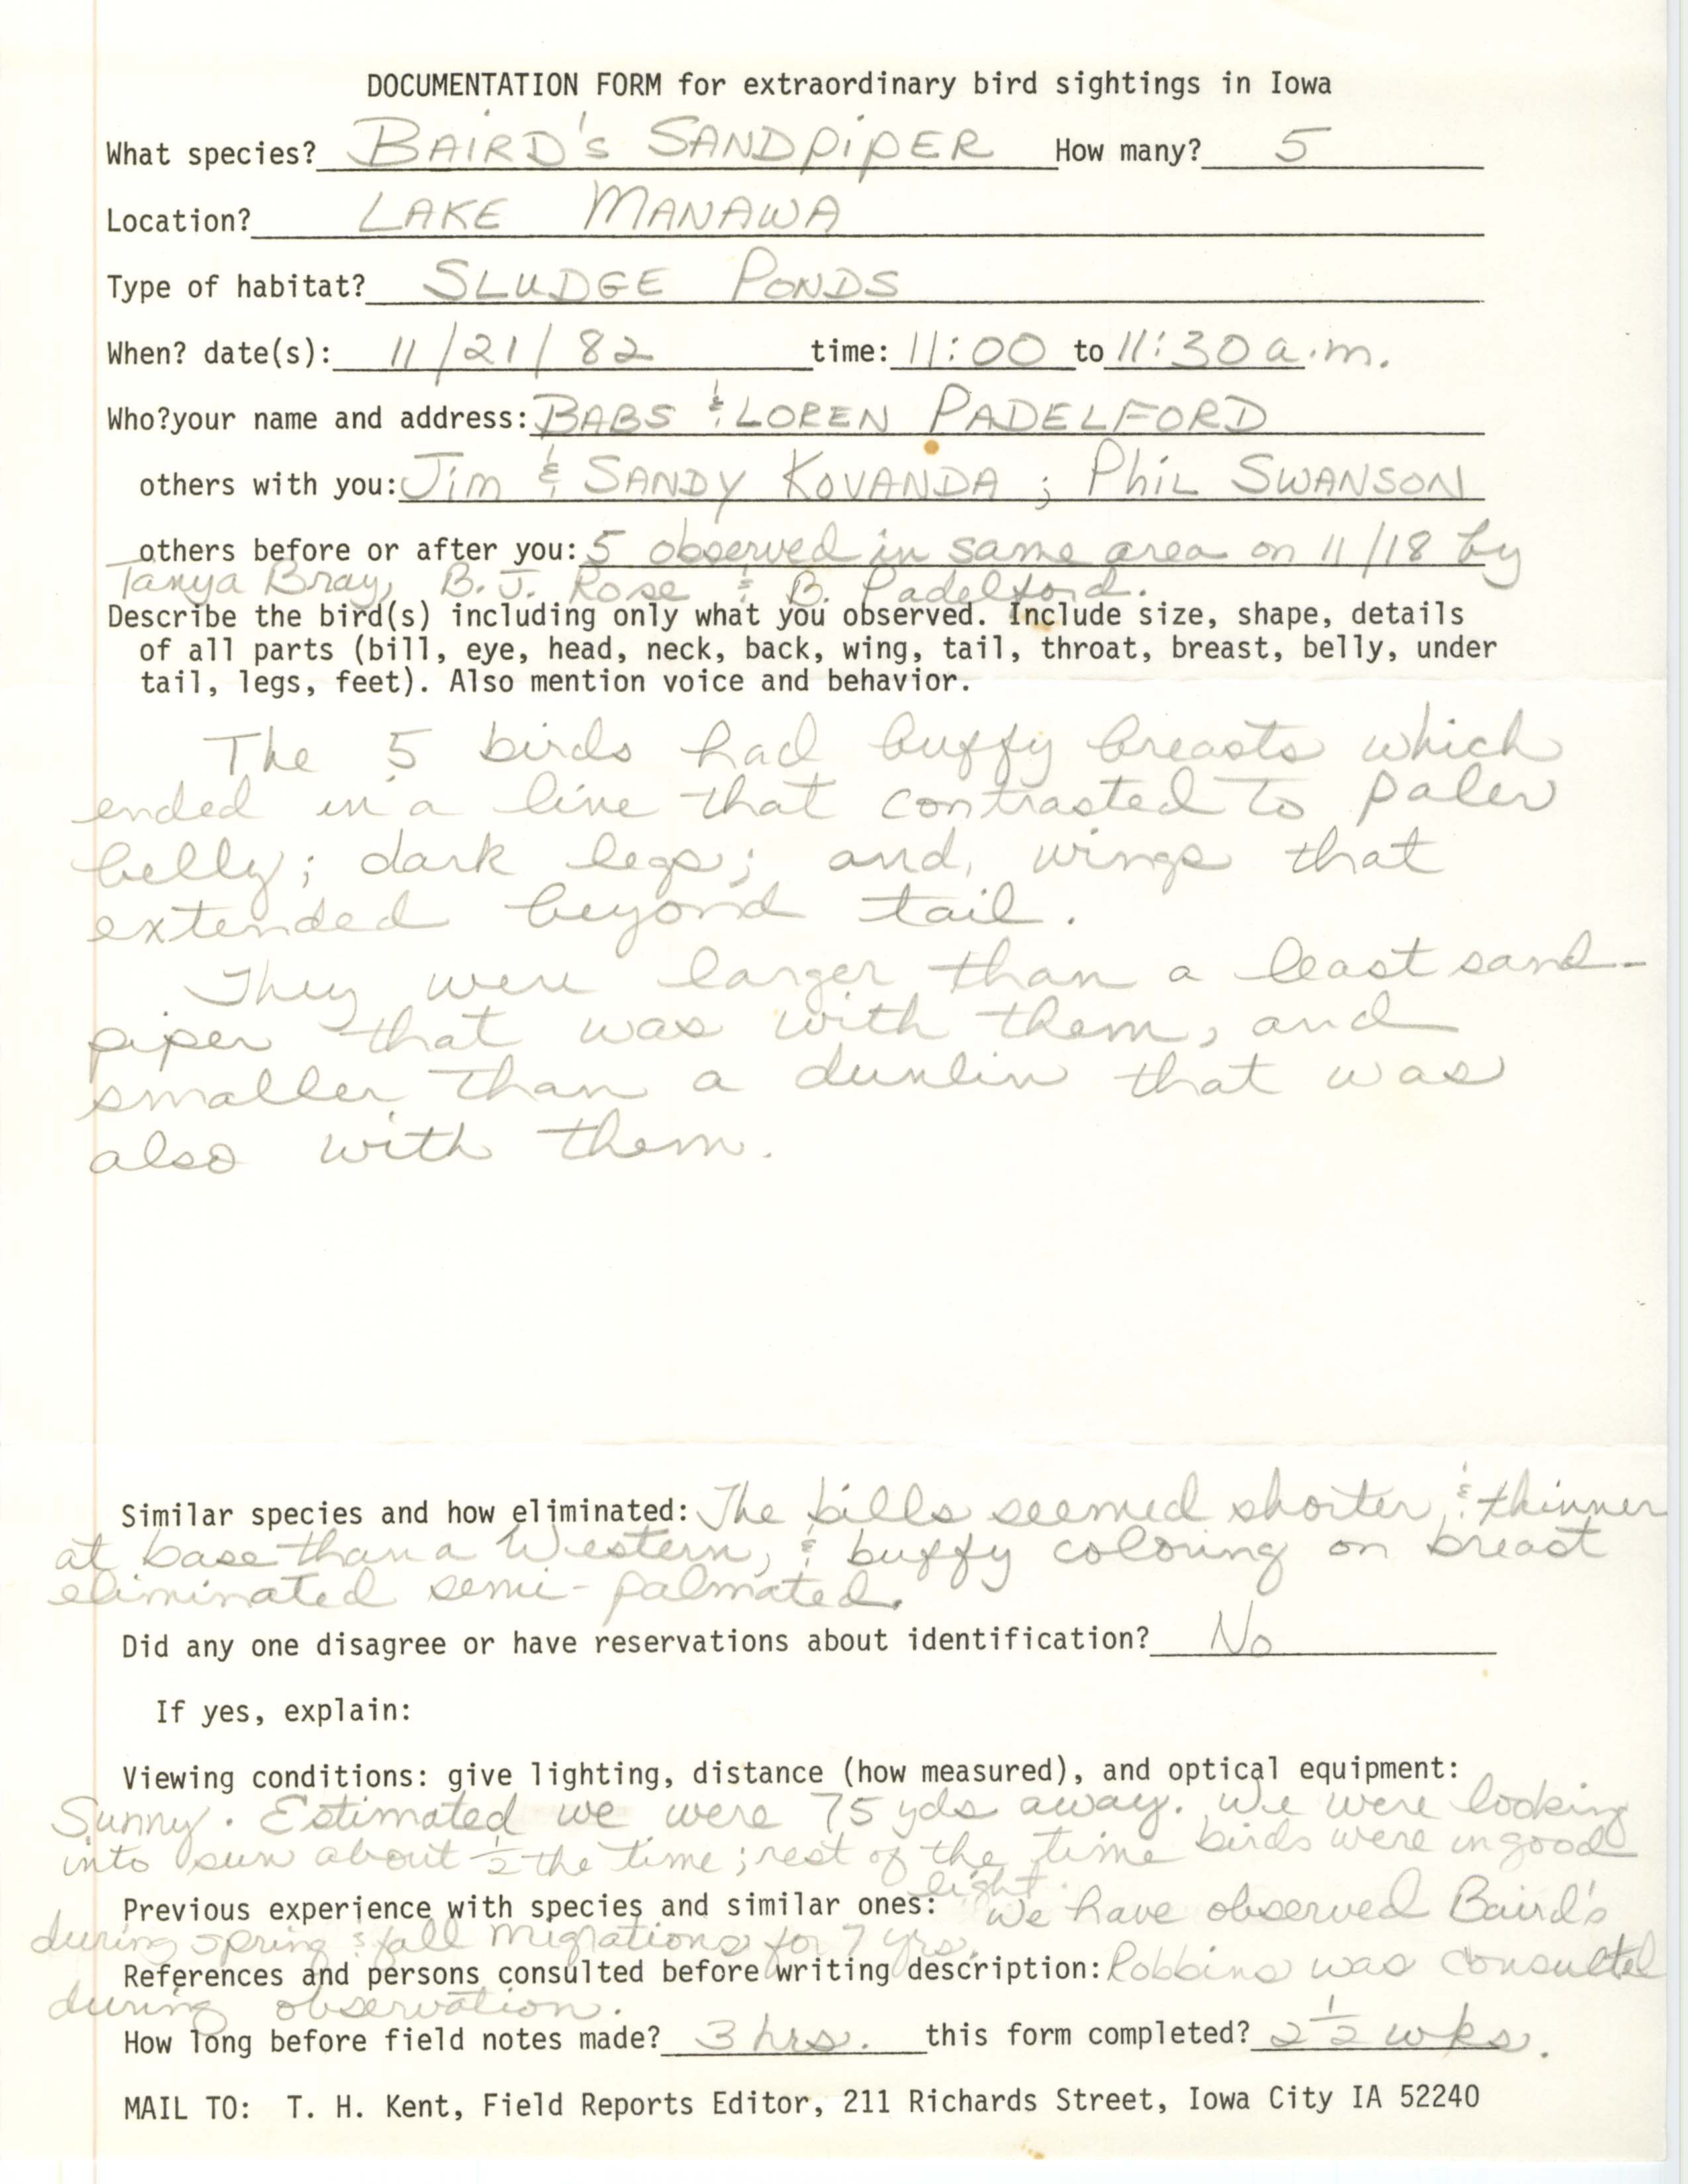 Rare bird documentation form for Baird's Sandpiper at Lake Manawa, 1982